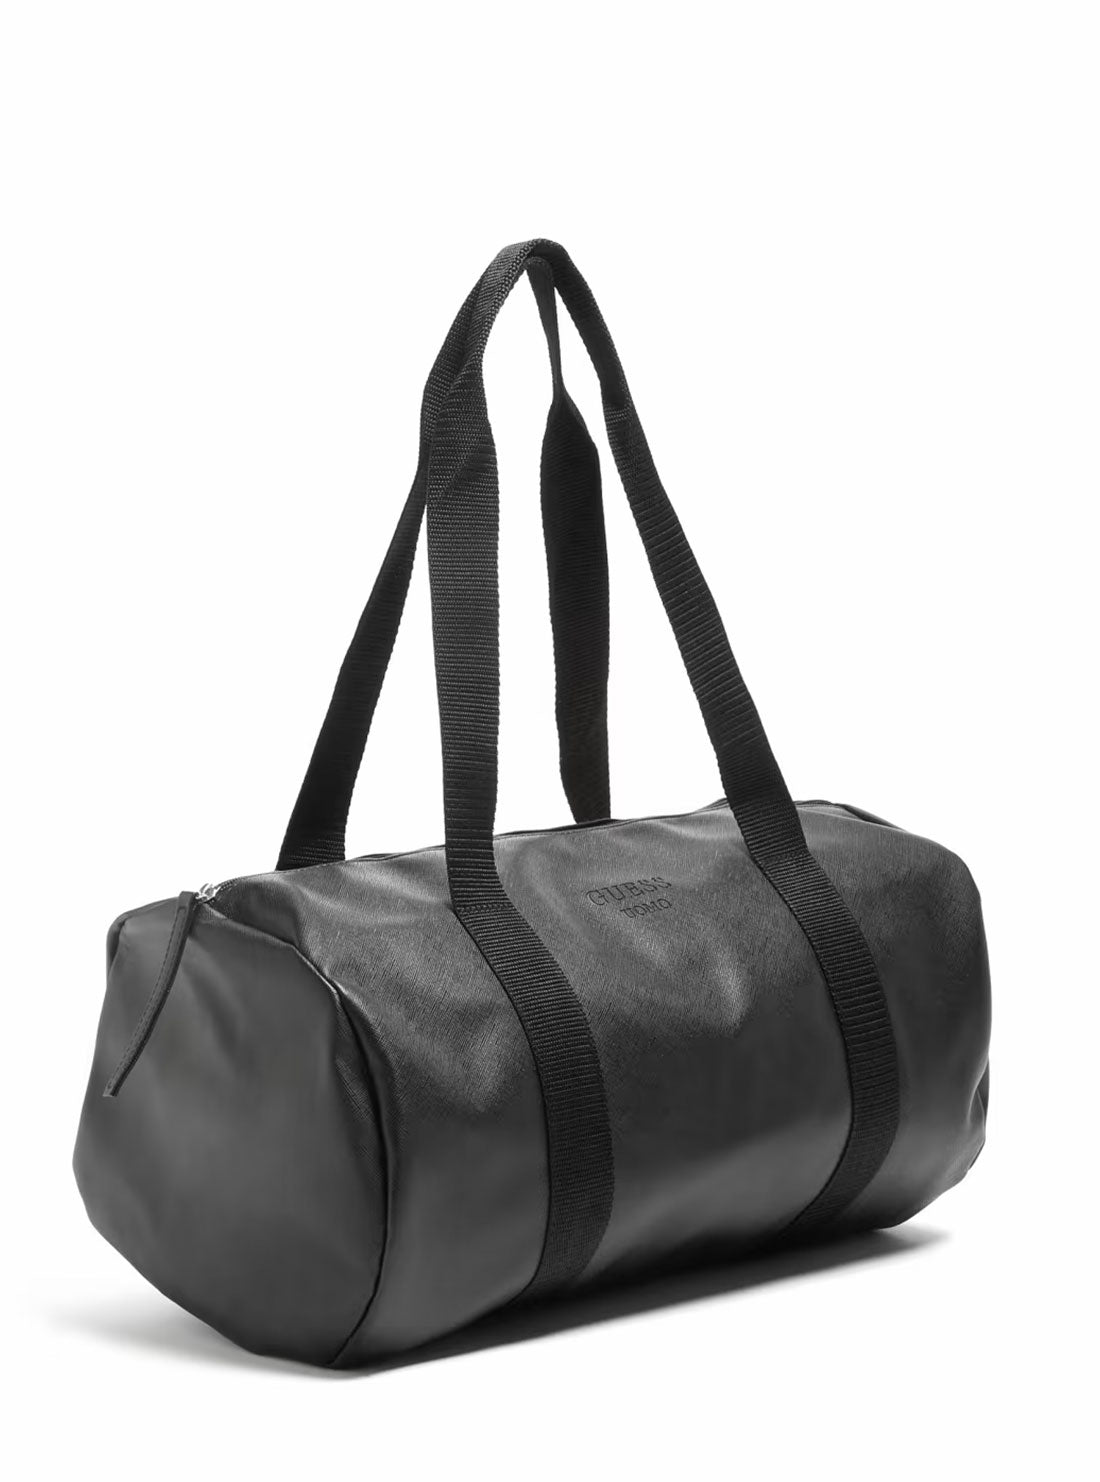 Black UOMO Duffle Bag